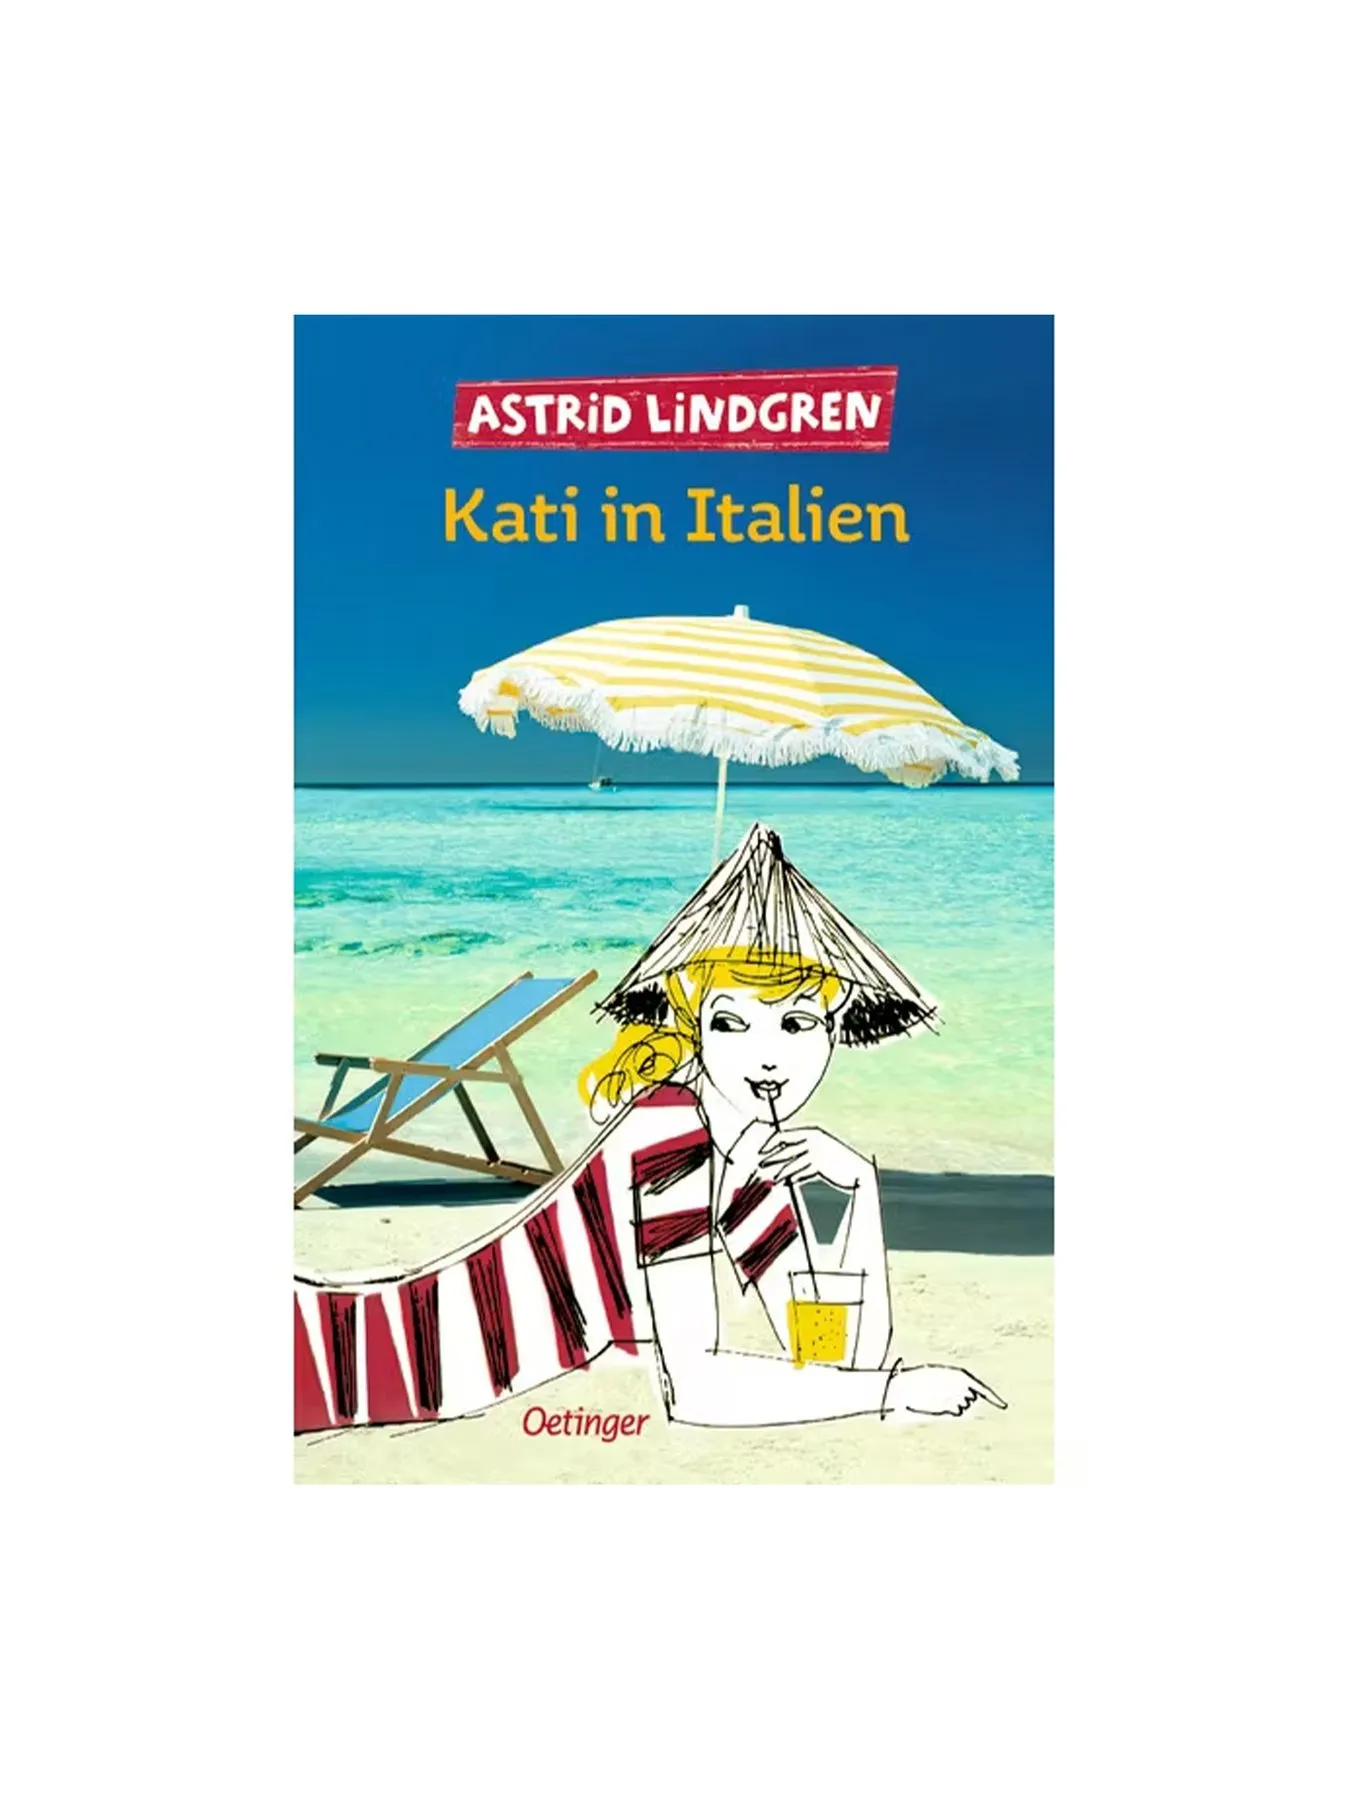 Kati in Italien (German)